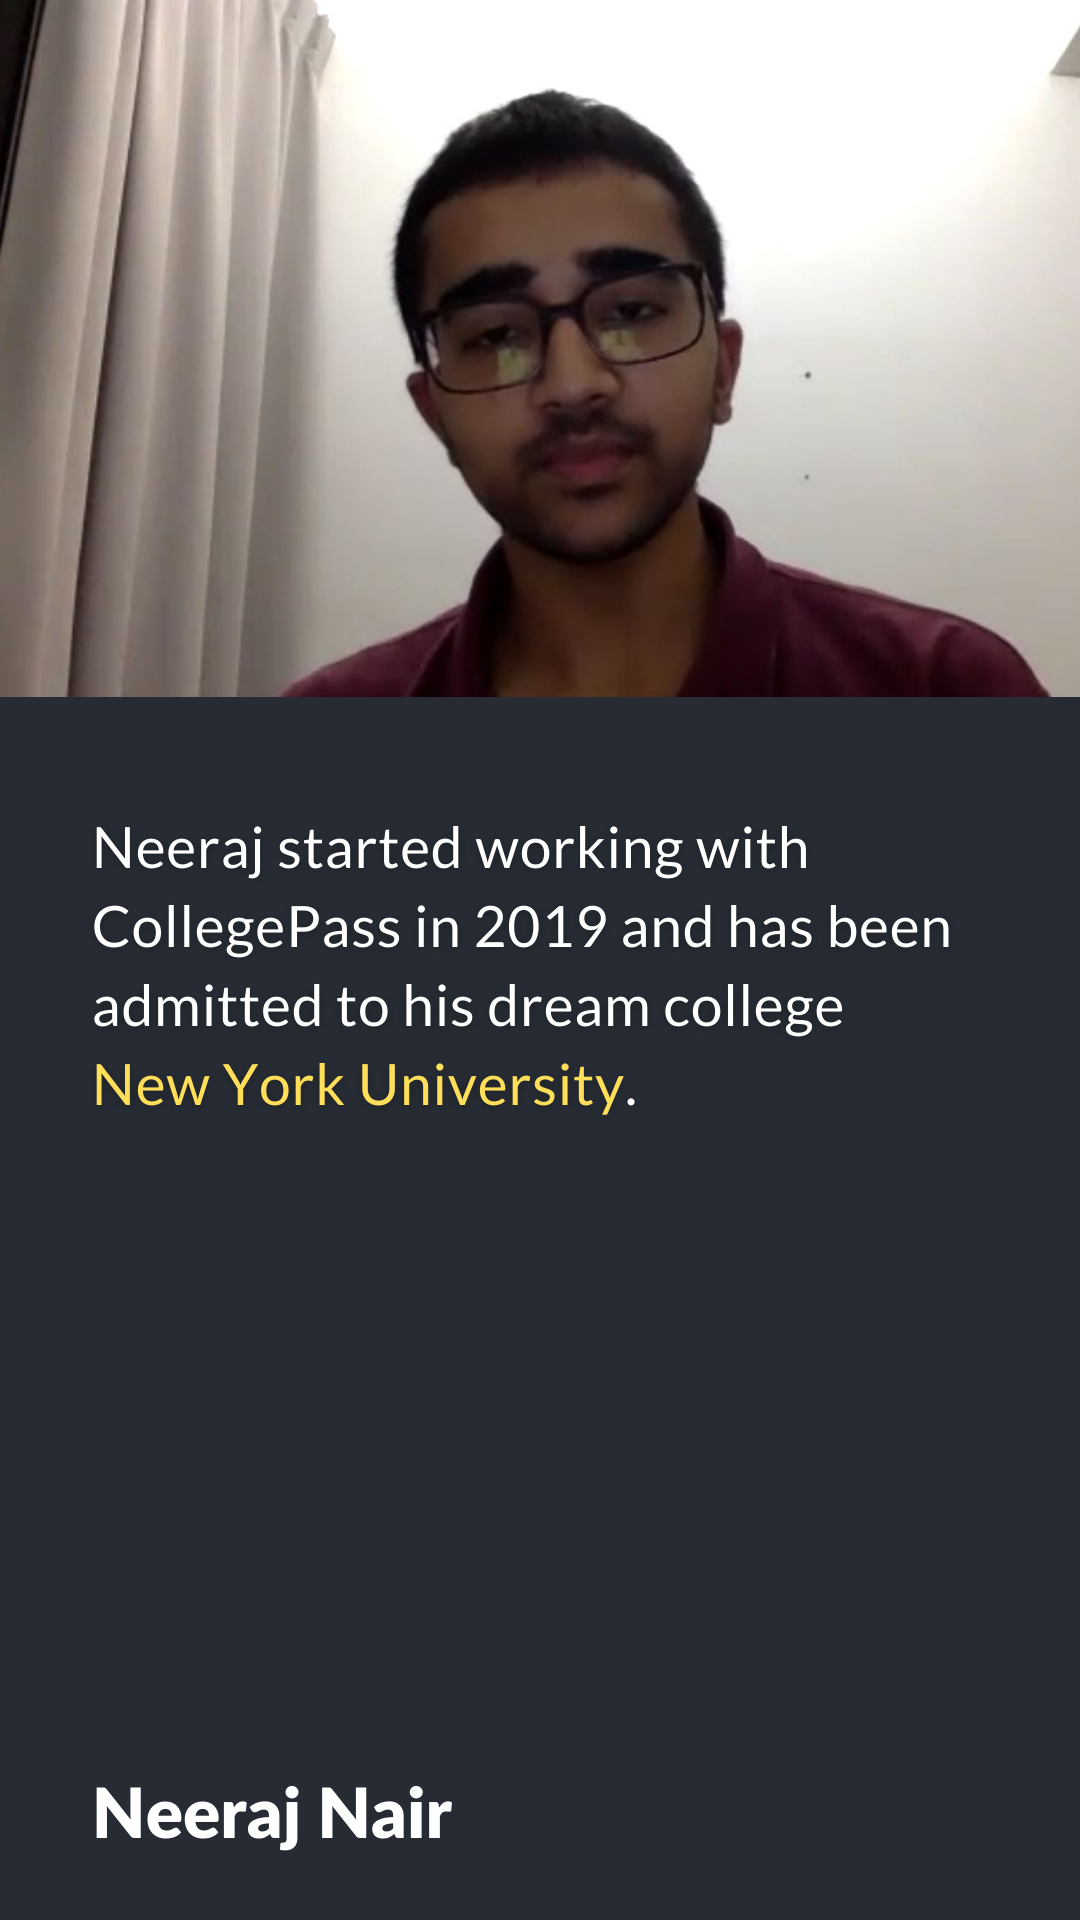 Niraj got admitted to his dream college, 'New York University.'